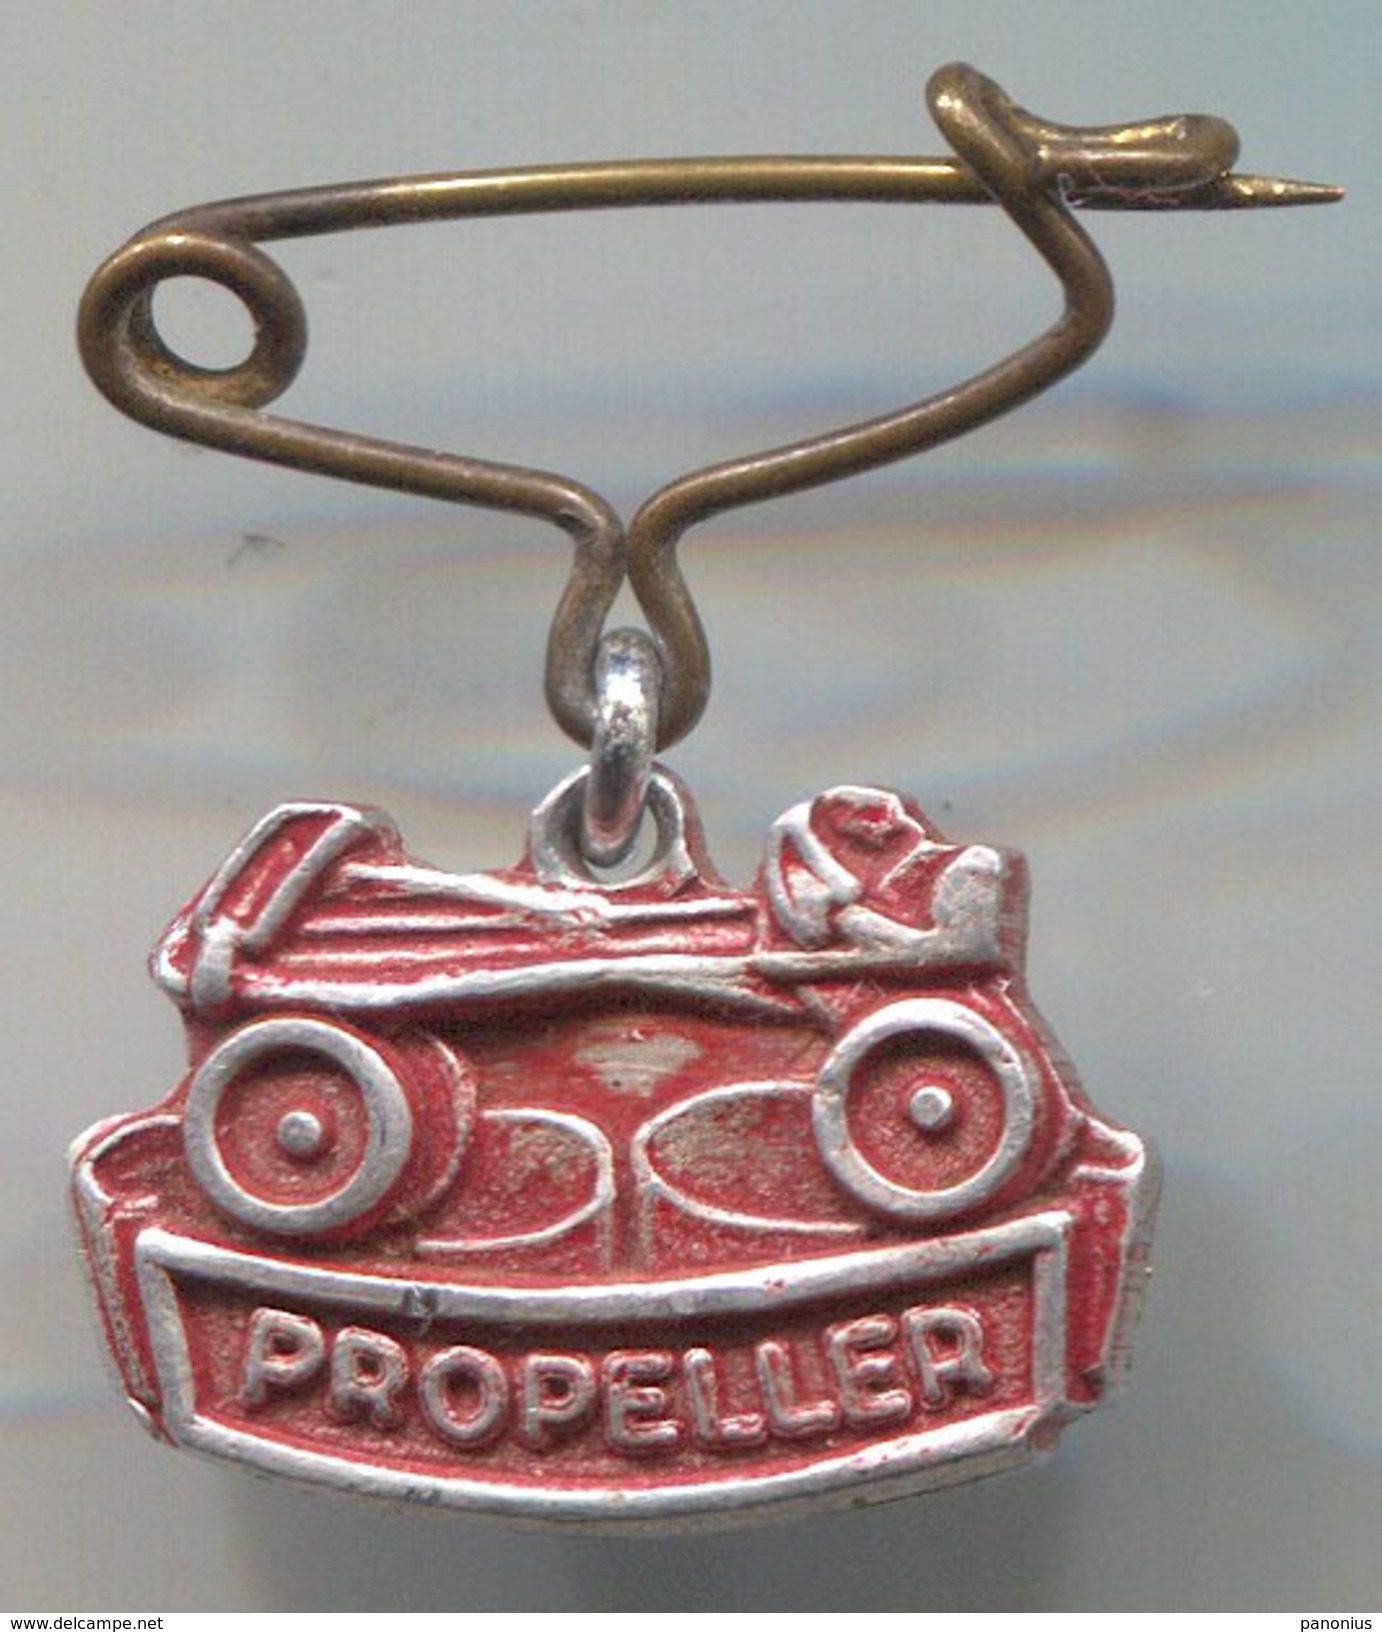 PROPELLER - Skating, Roller Skates, Vintage Pin, Badge, Abzeichen - Patinage Artistique